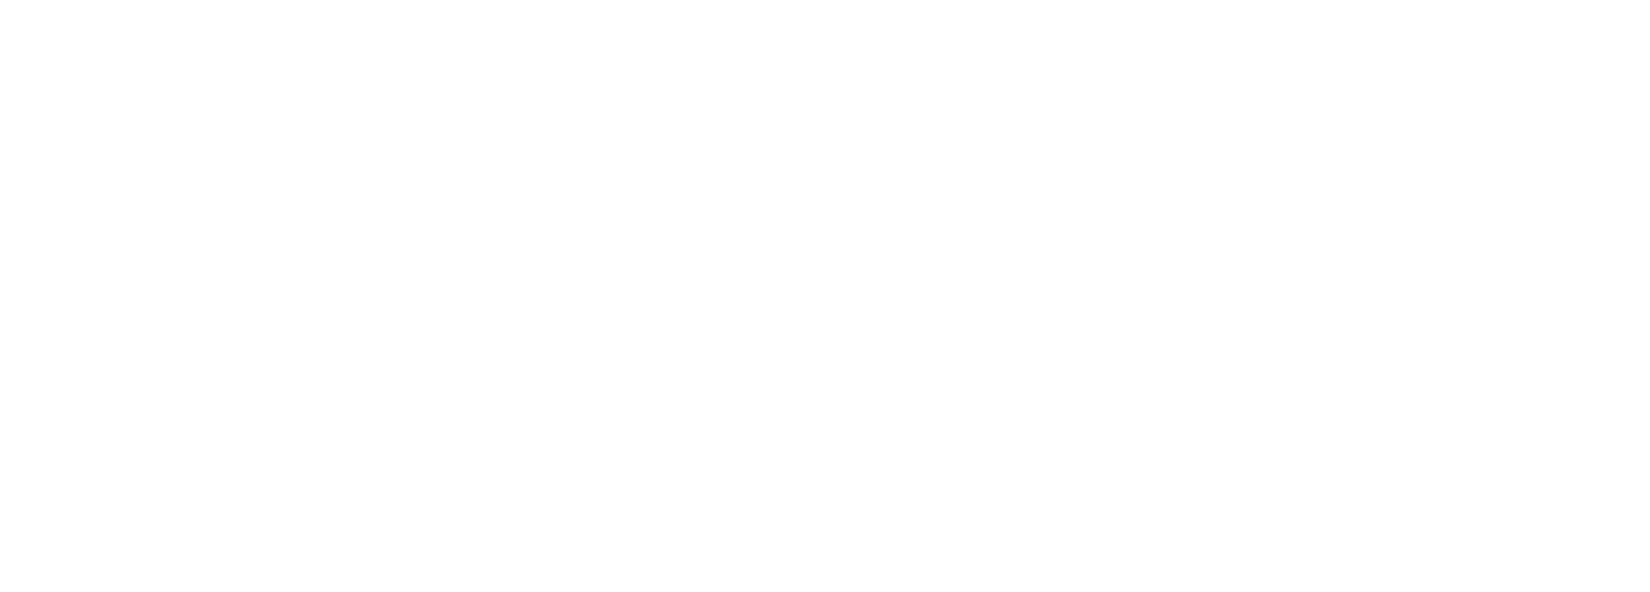 Jogo Horizon Zero Dawn Complete Edition para PS4 - Videogames - Monte  Castelo, Parnamirim 1249989230